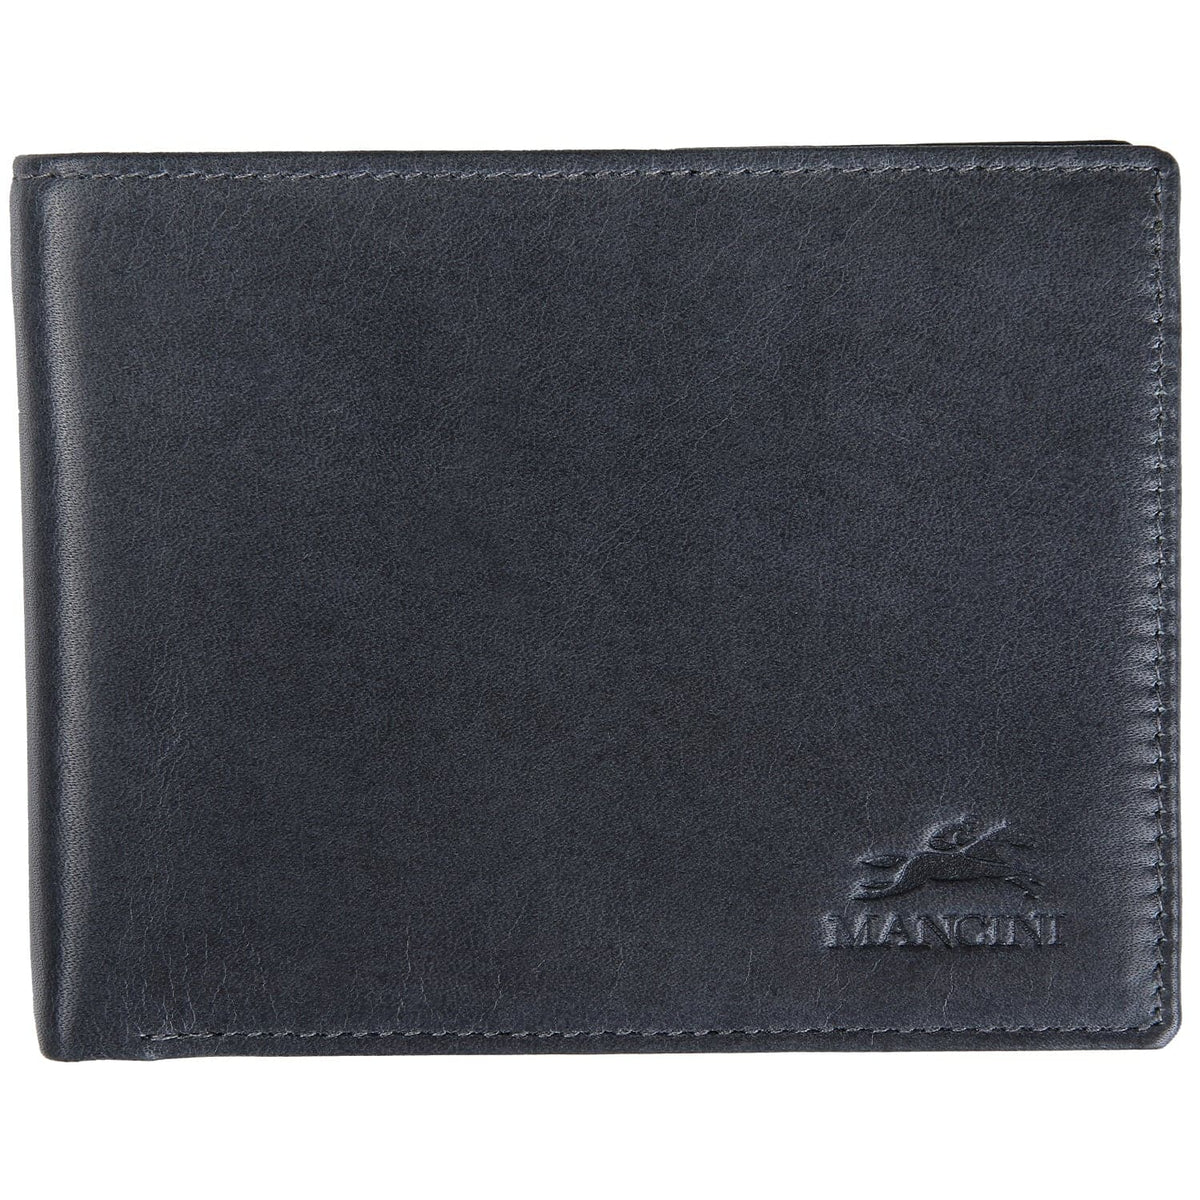 Mancini Bellagio RFID Left Wing Billfold Wallet